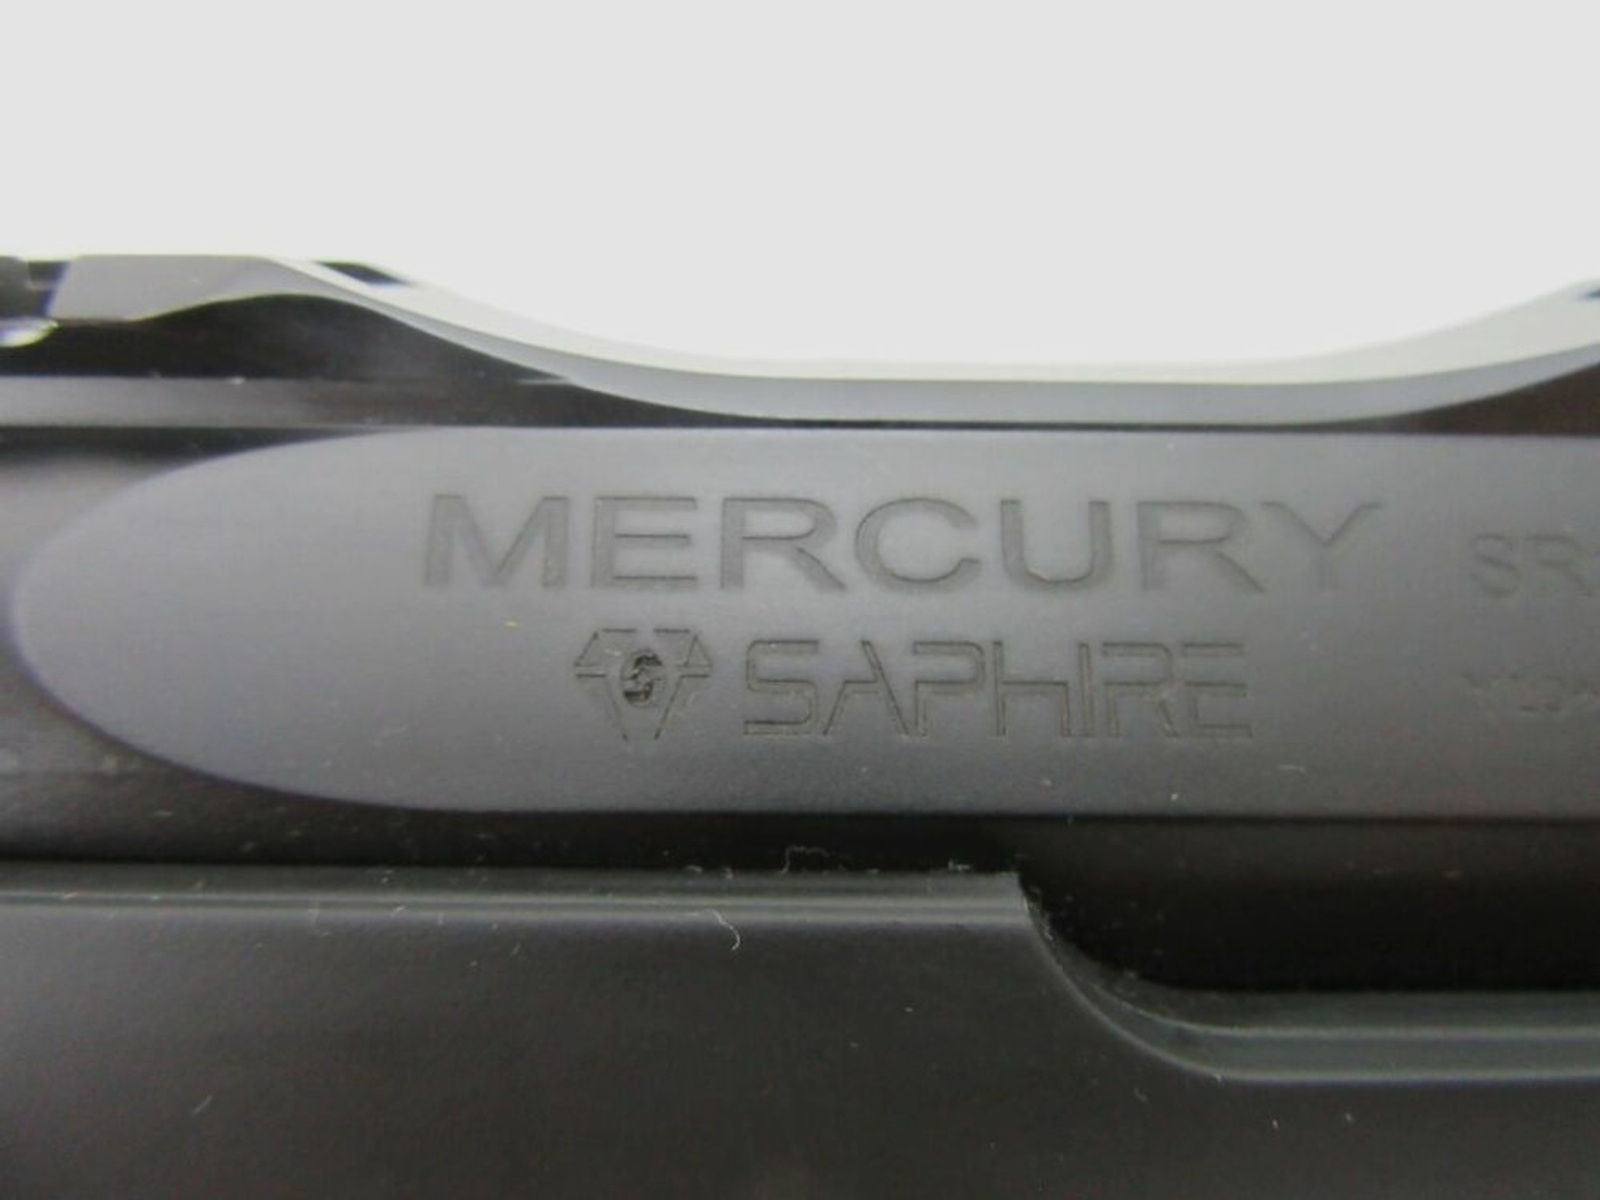 Mercury / Sabatti	 Saphire